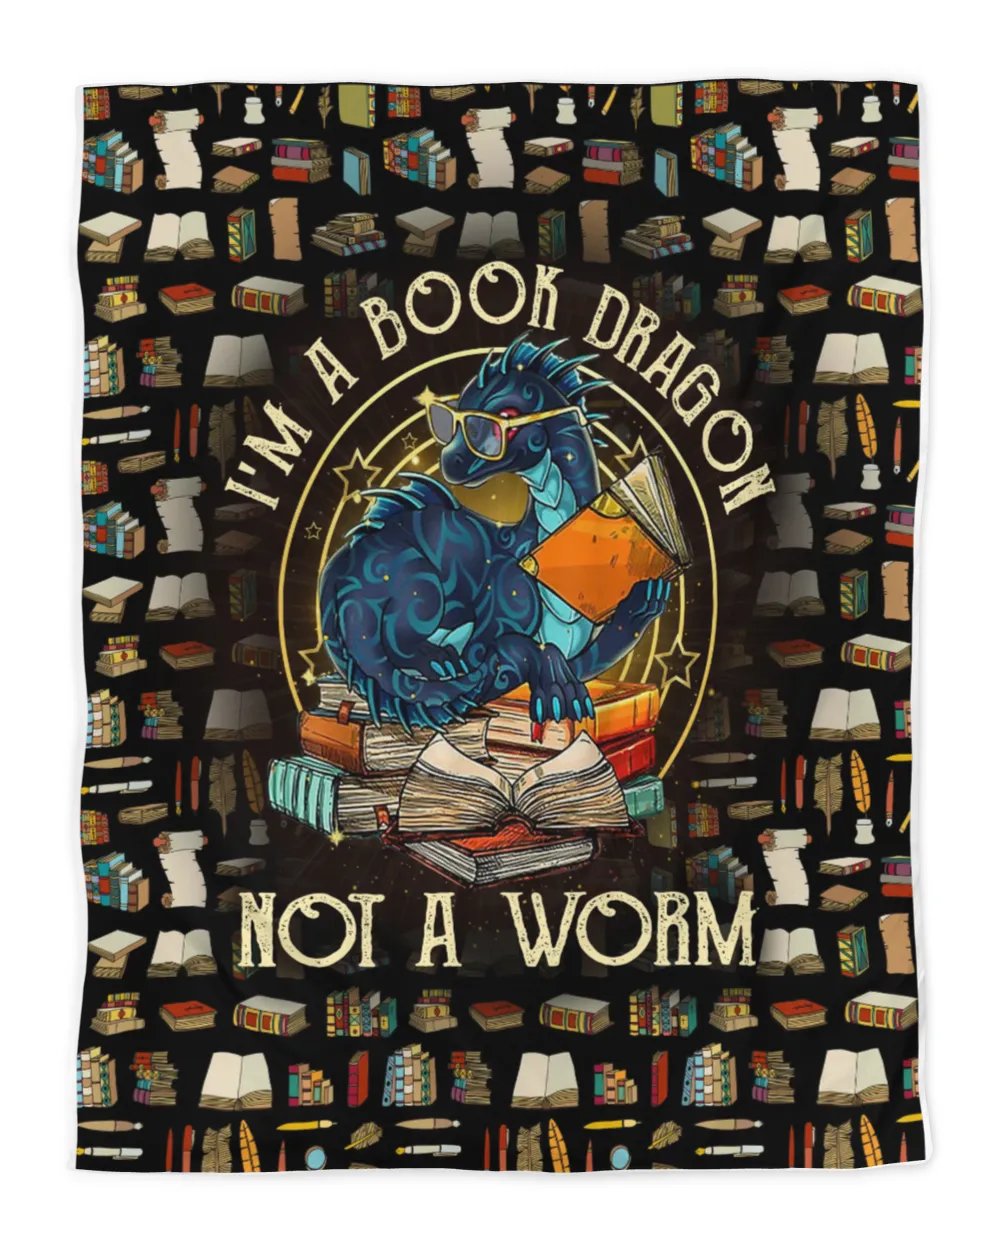 Book- I'm a book dragon